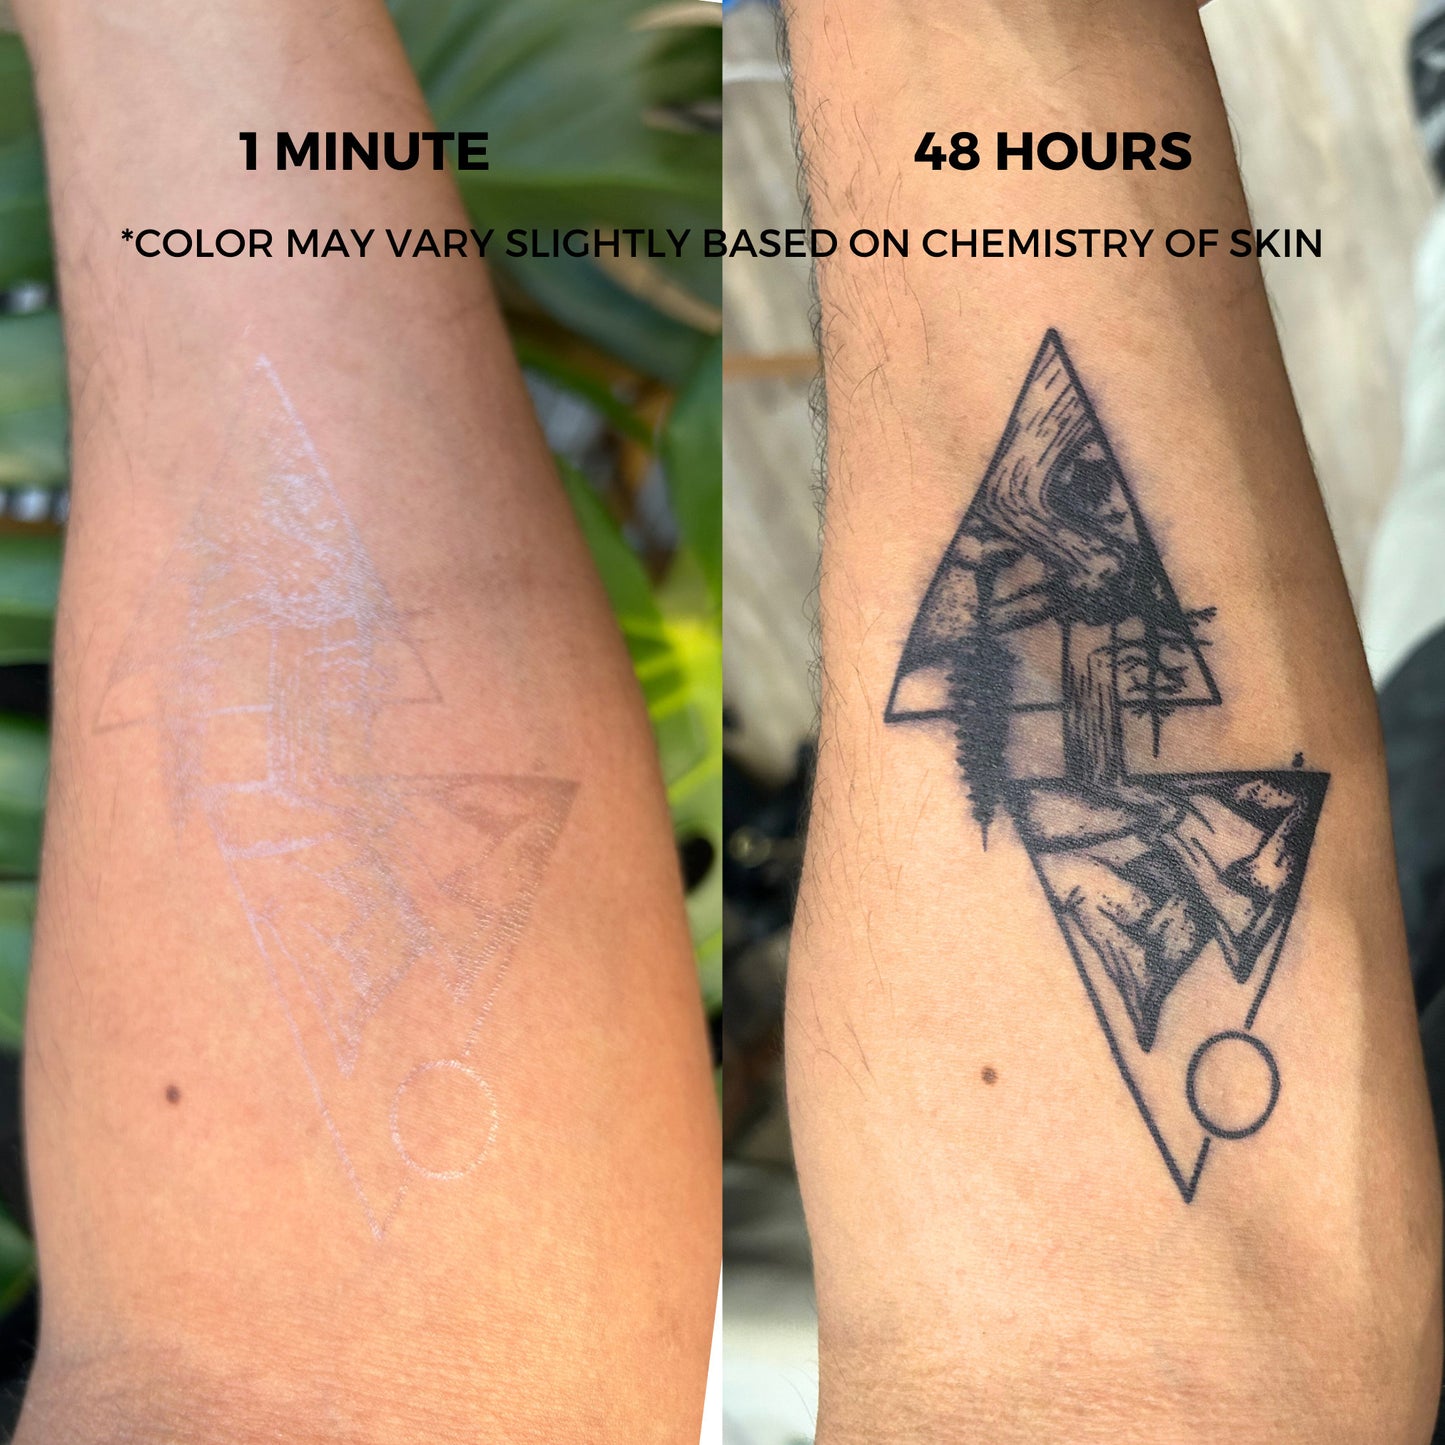 Celestial Sun Tattoo | 2 Week Temporary Tattoo | Plant Based Vegan Tattoo | Boho Tattoo | Festival Tattoo | Spiritual Tattoo